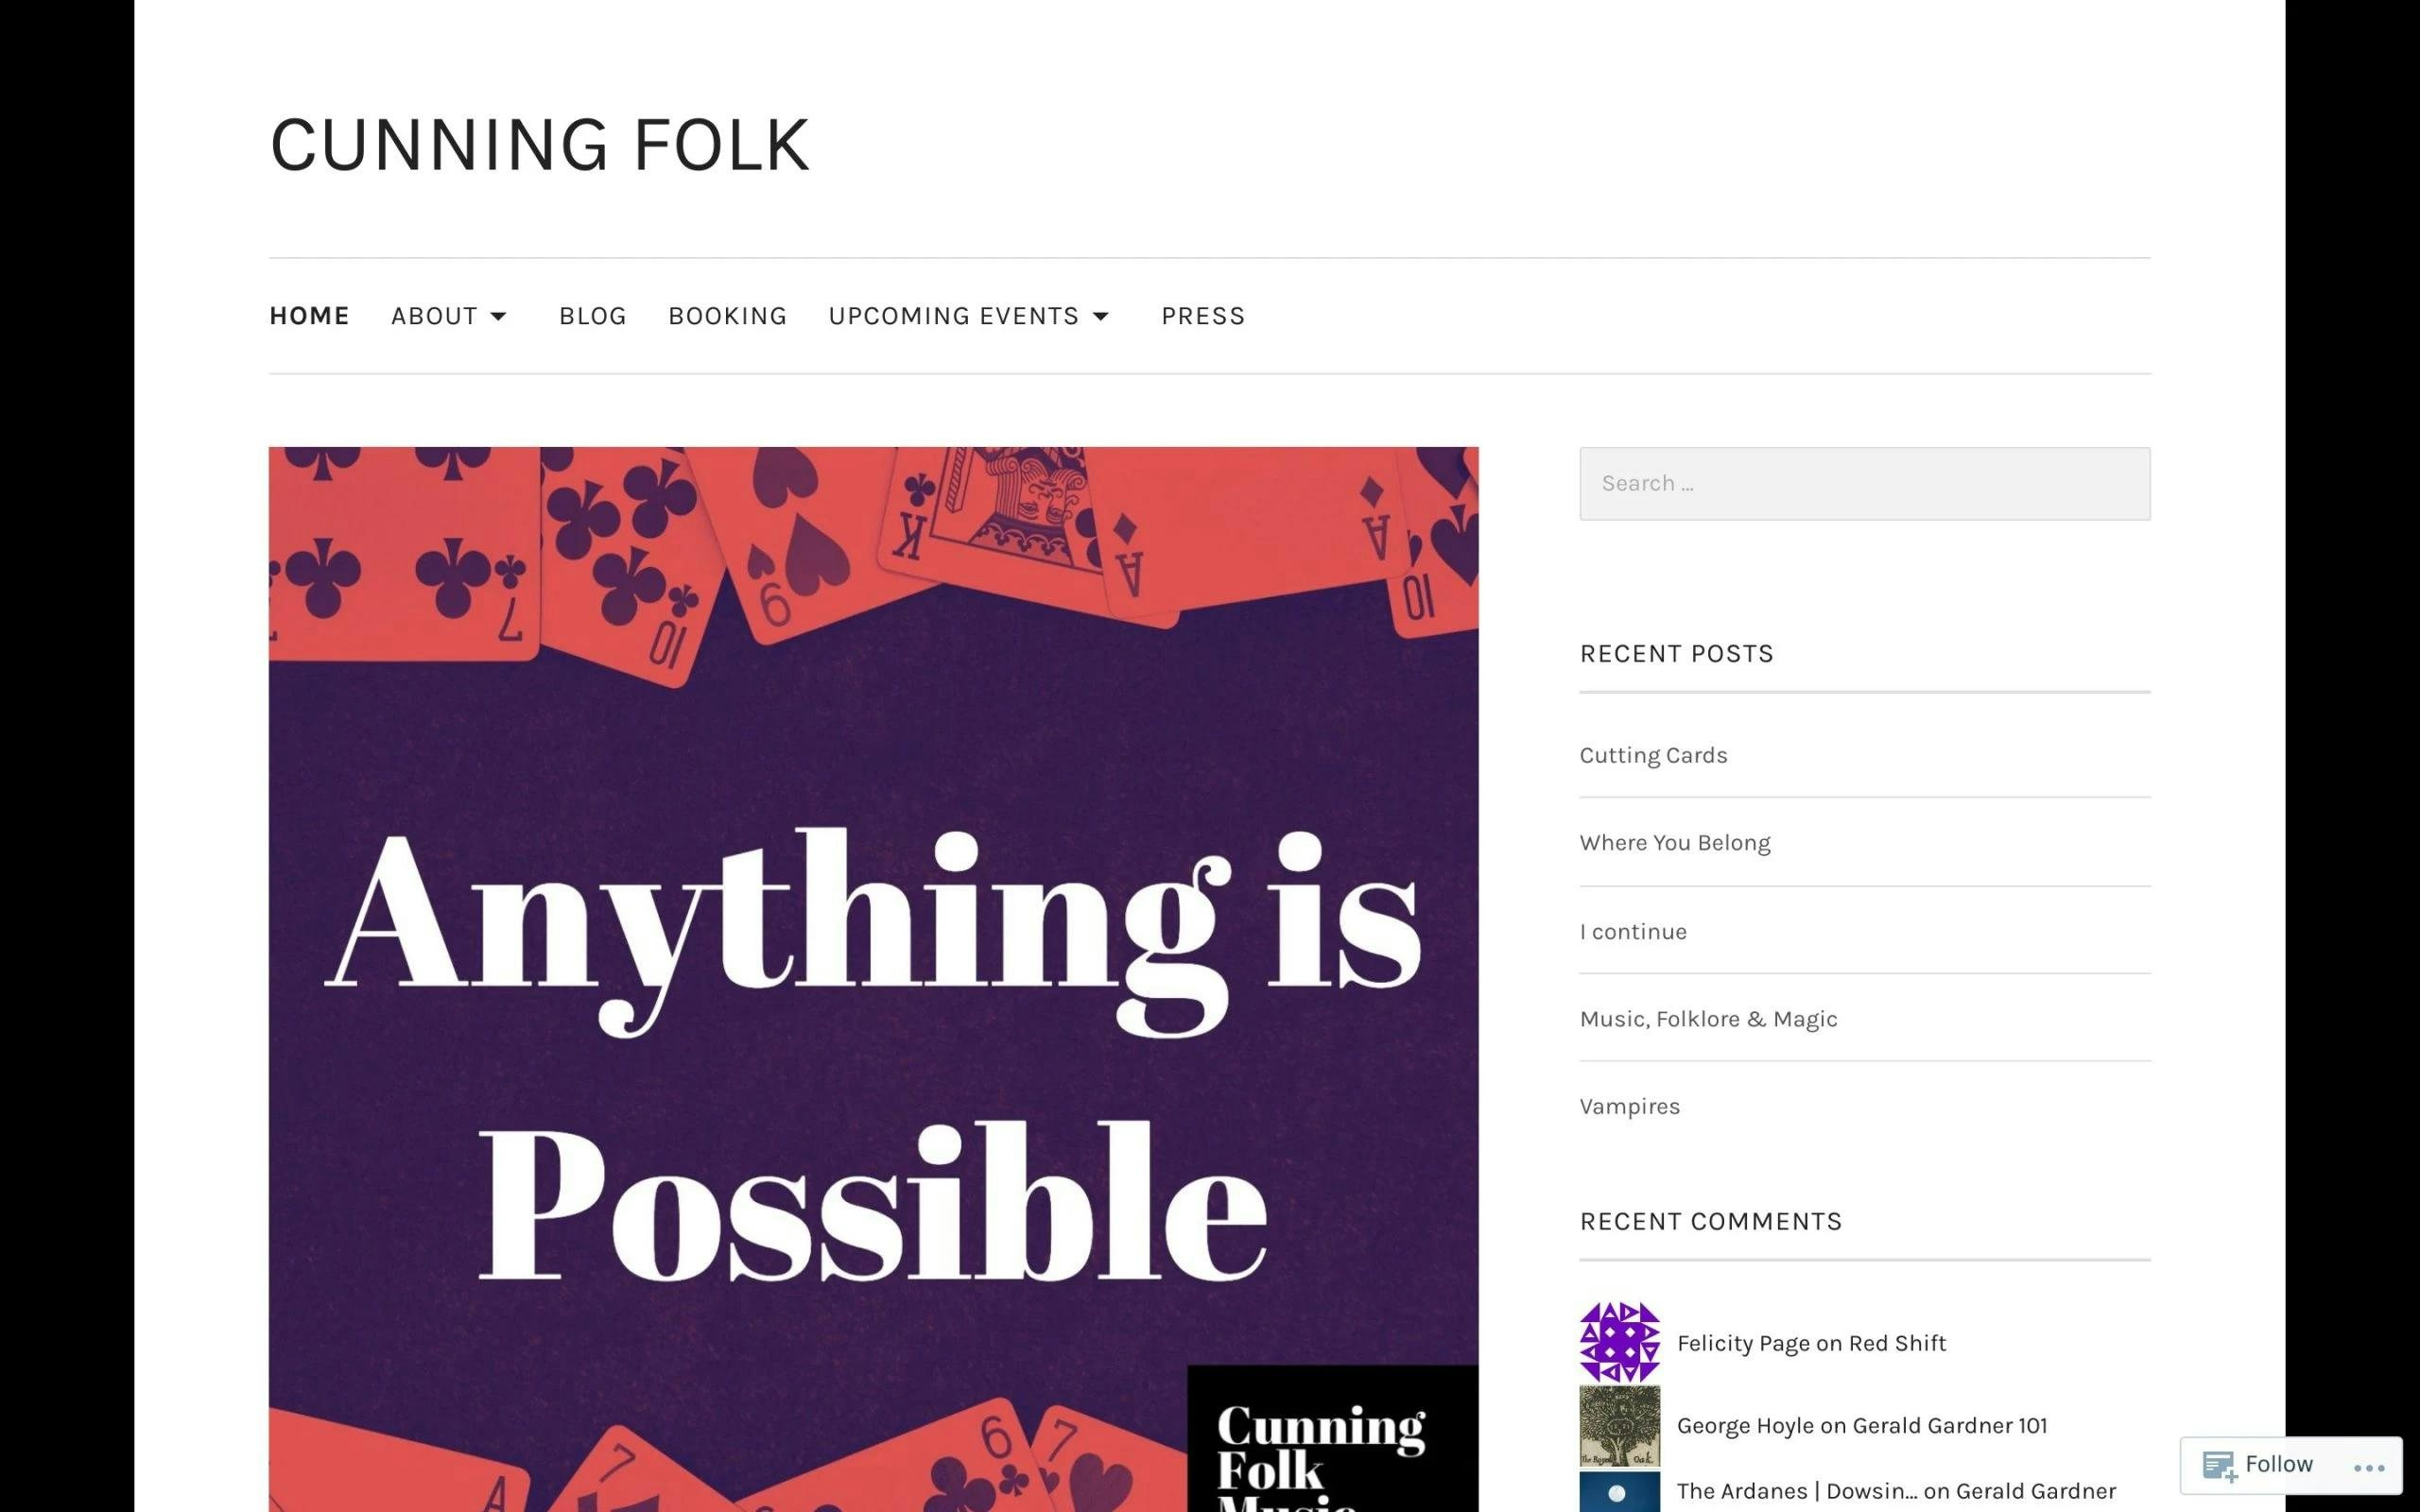 Cunning Folk music blog